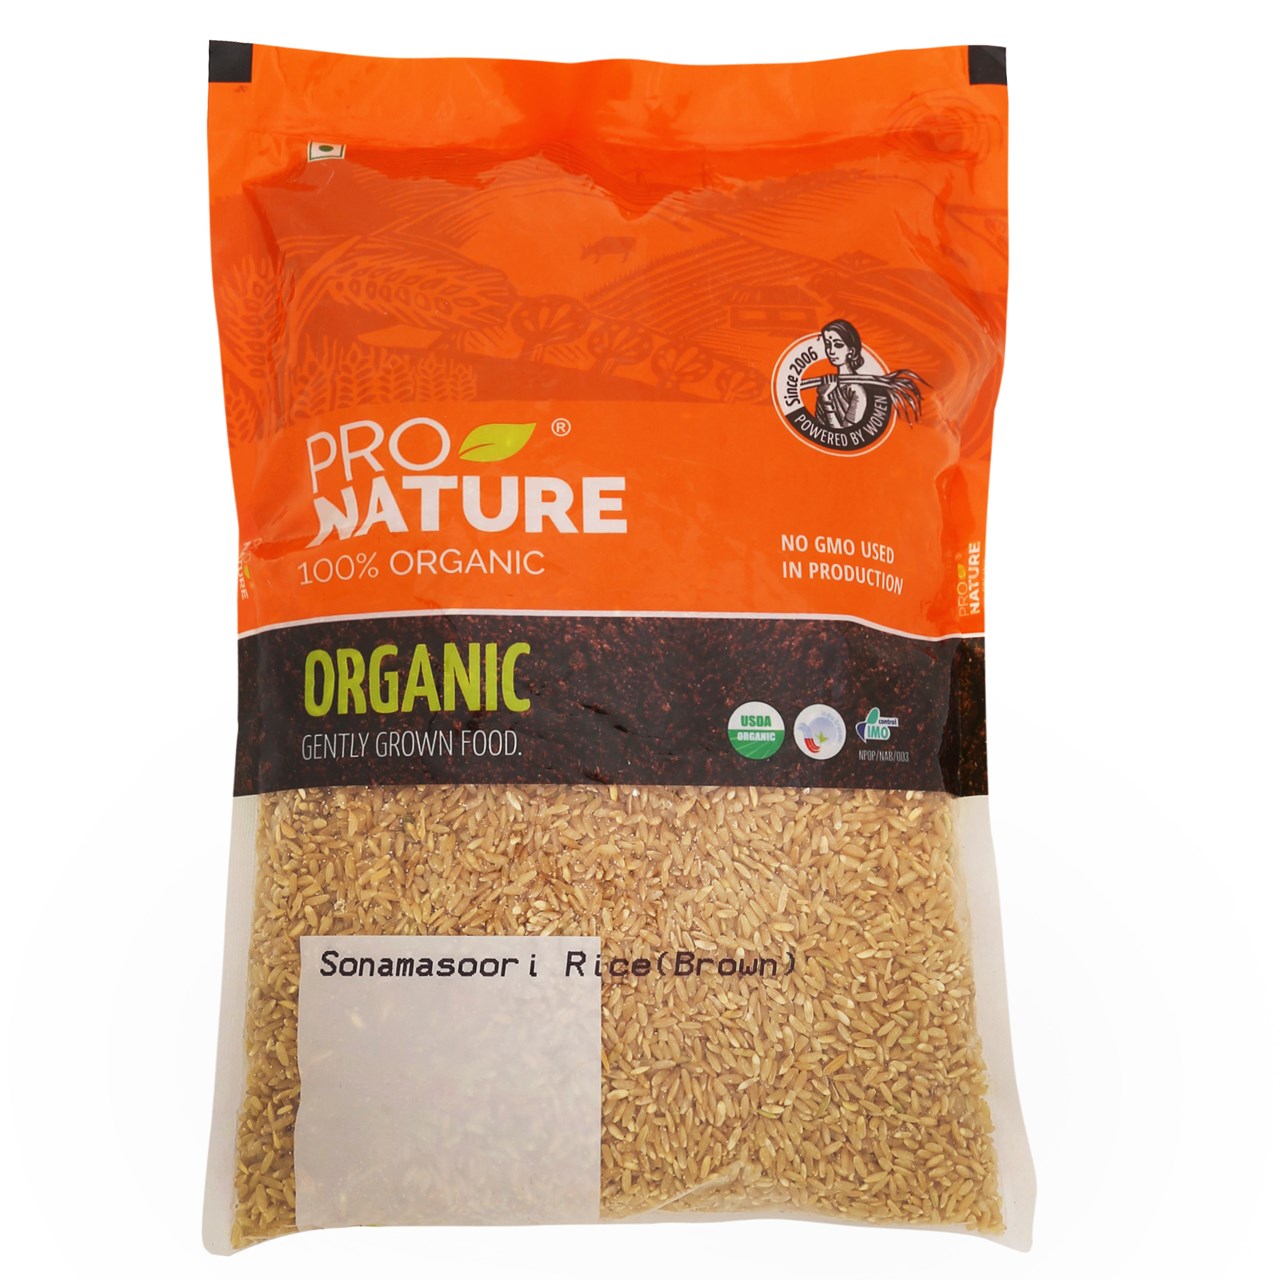 Picture of Pro Nature 100% Organic Sonamasoori Rice (Brown) 1 Kg